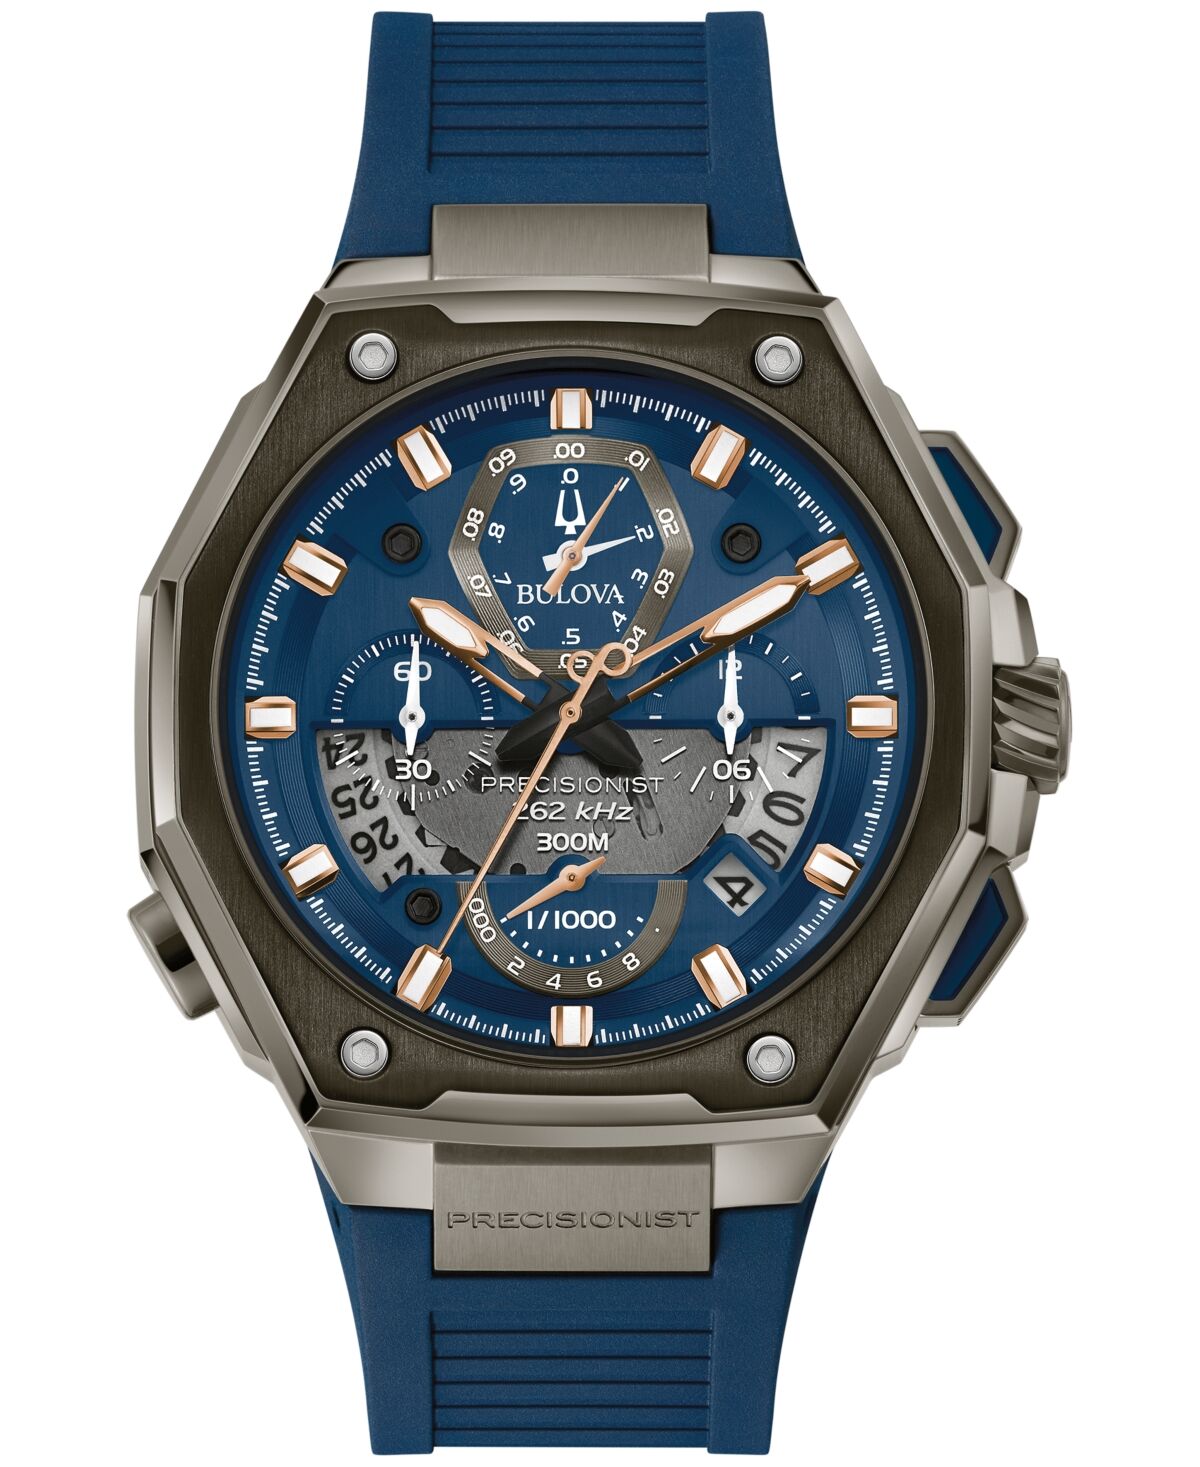 Bulova Men's Chronograph Precisionist X Blue Epdm Rubber Strap Watch 44.5mm - Blue